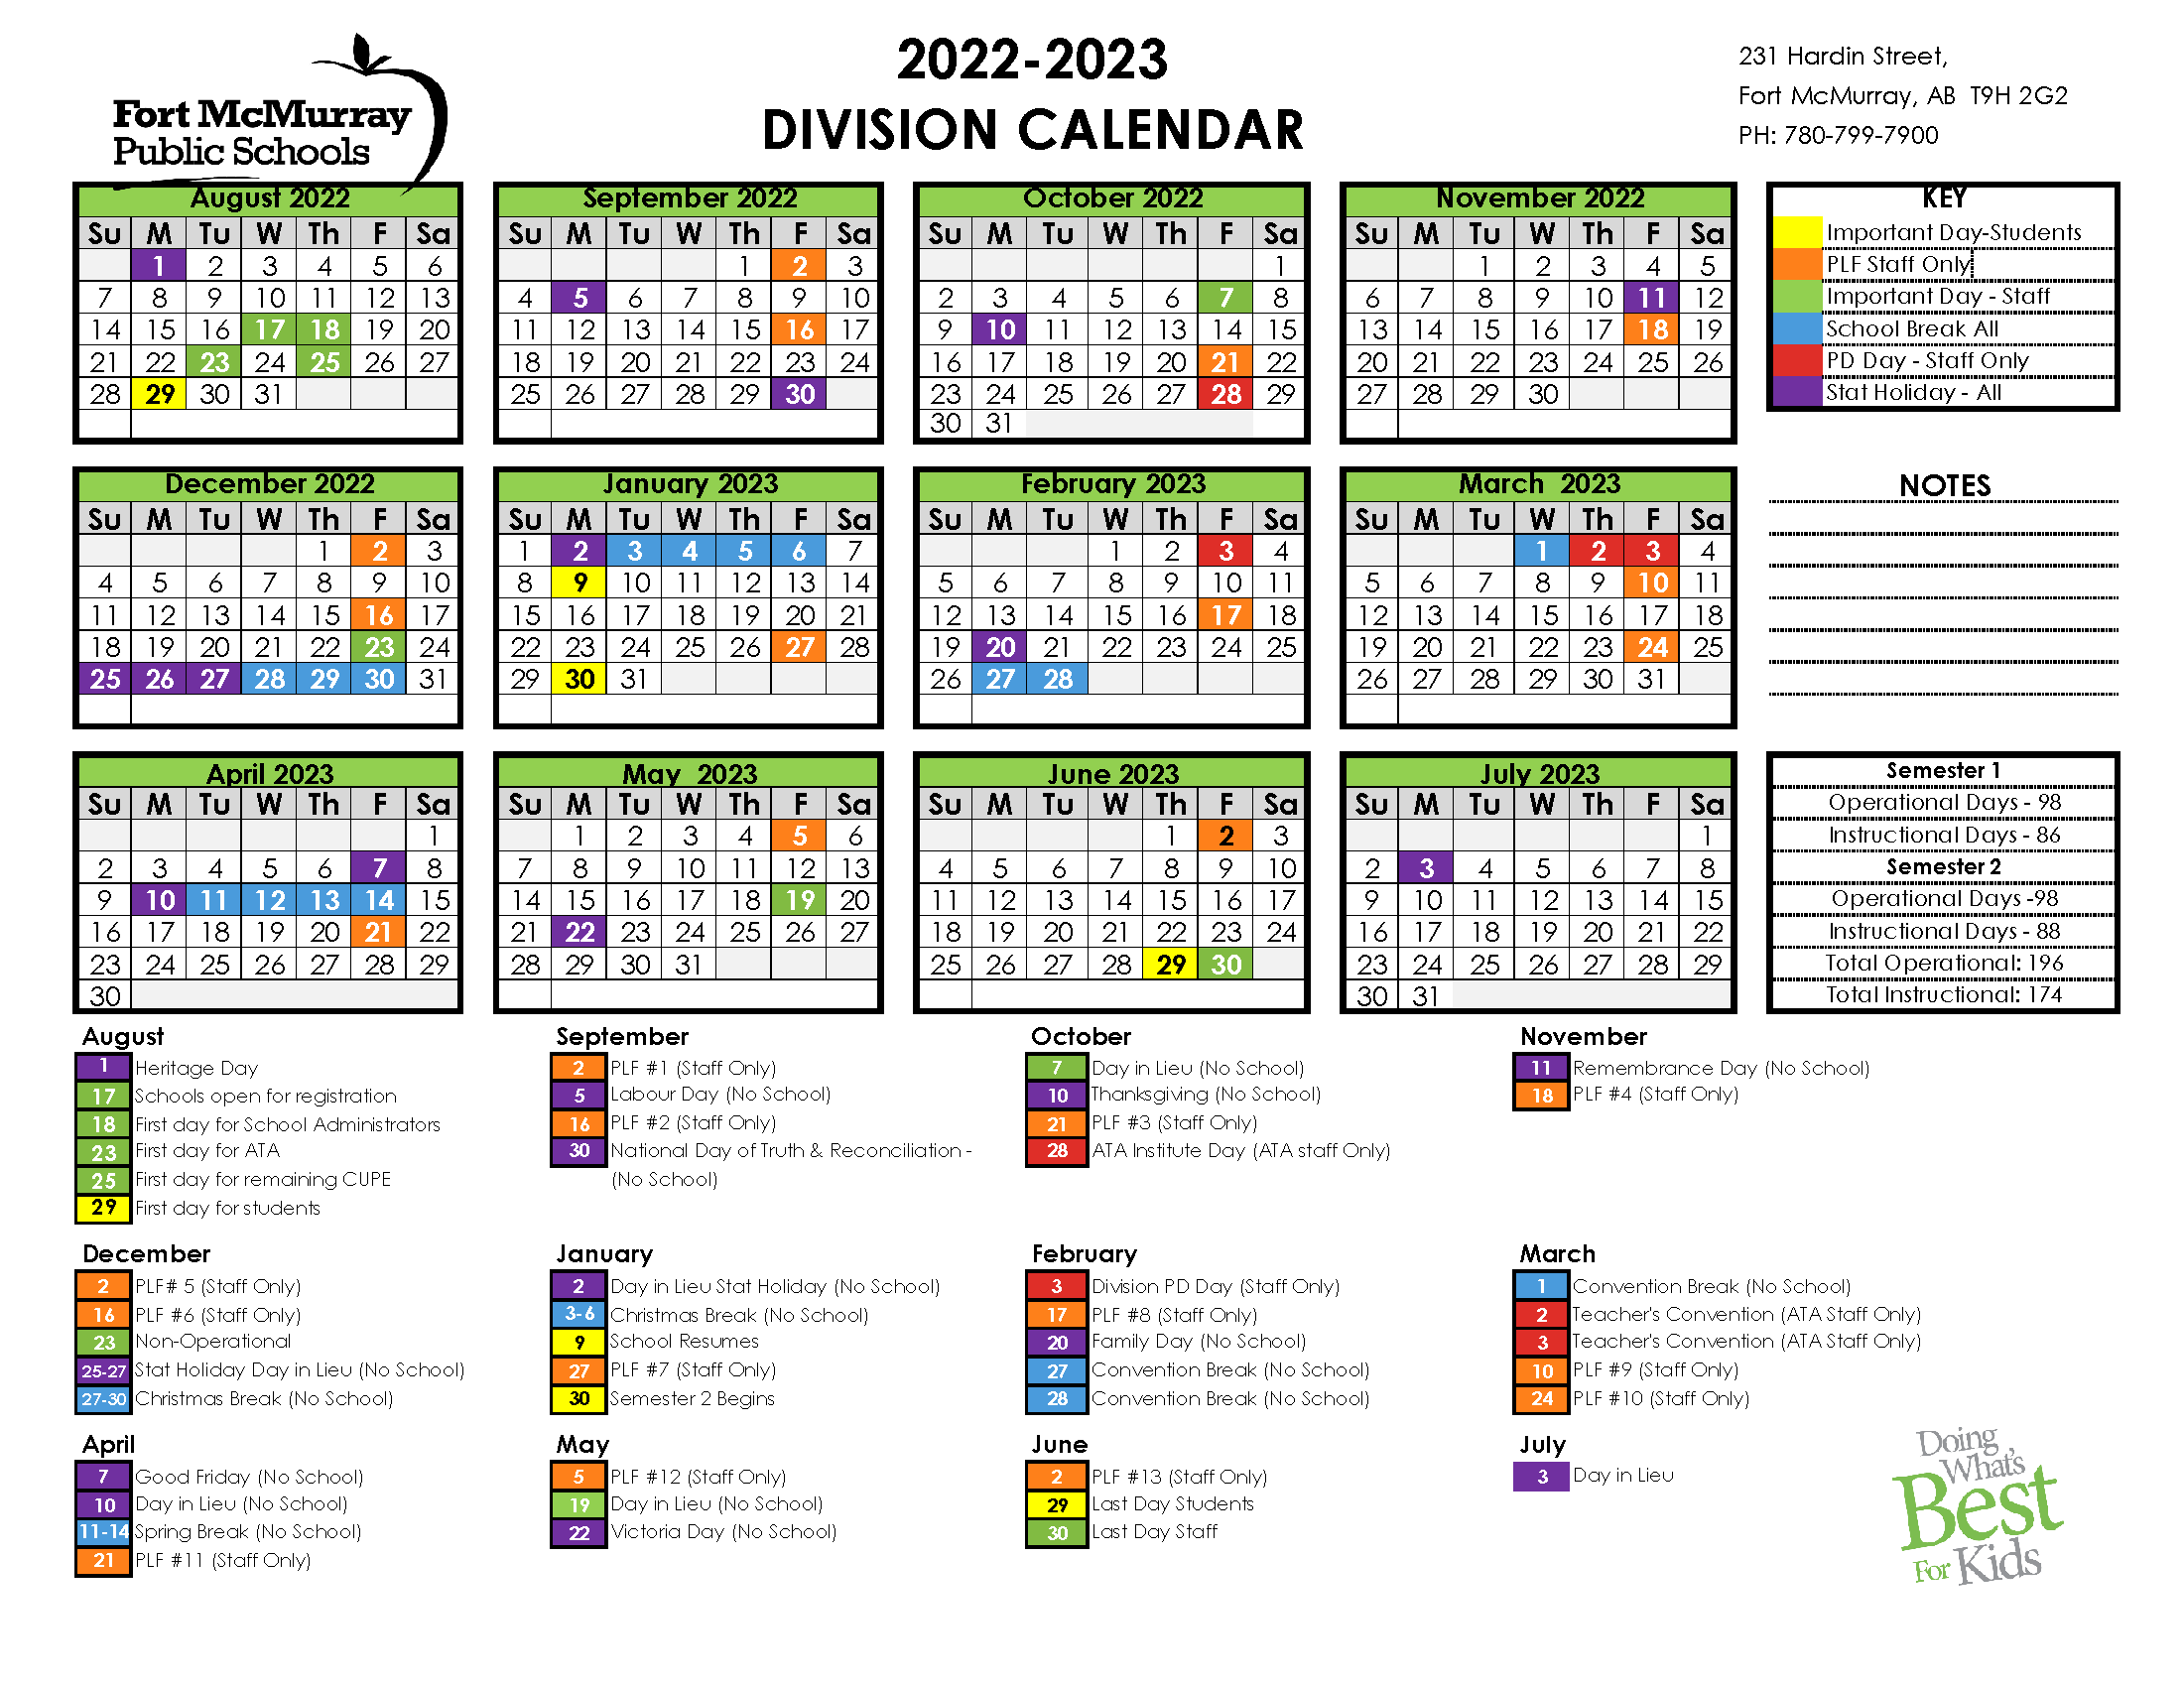 20222023 School Calendar Released Fort McMurray Public School Division